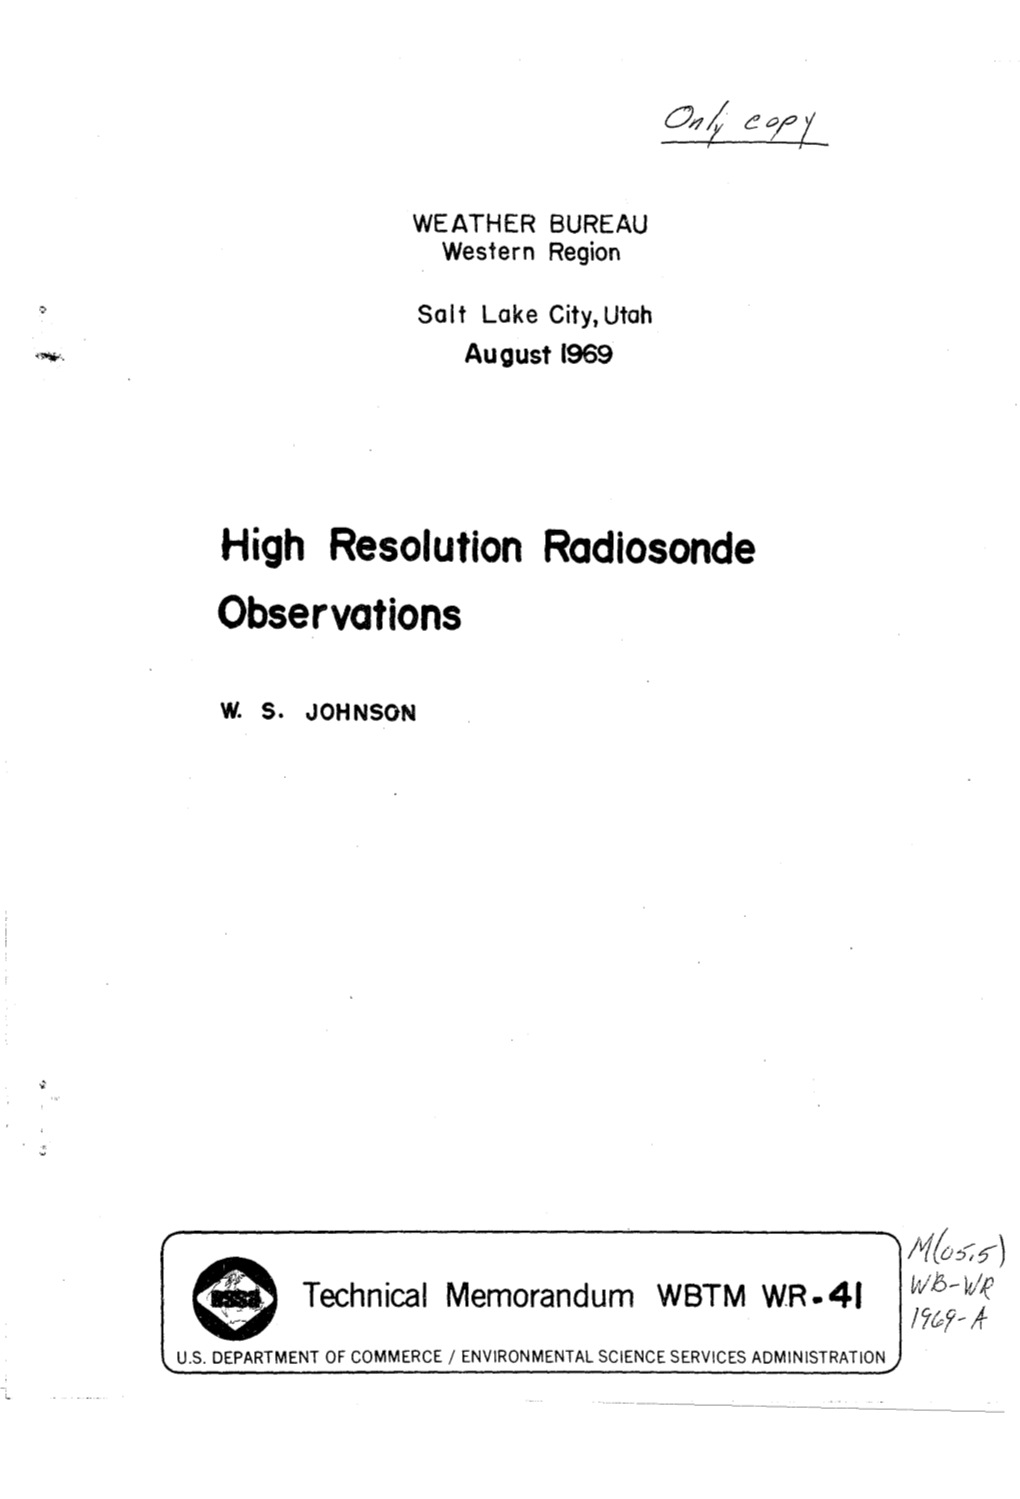 High Resolution Radiosonde Observations